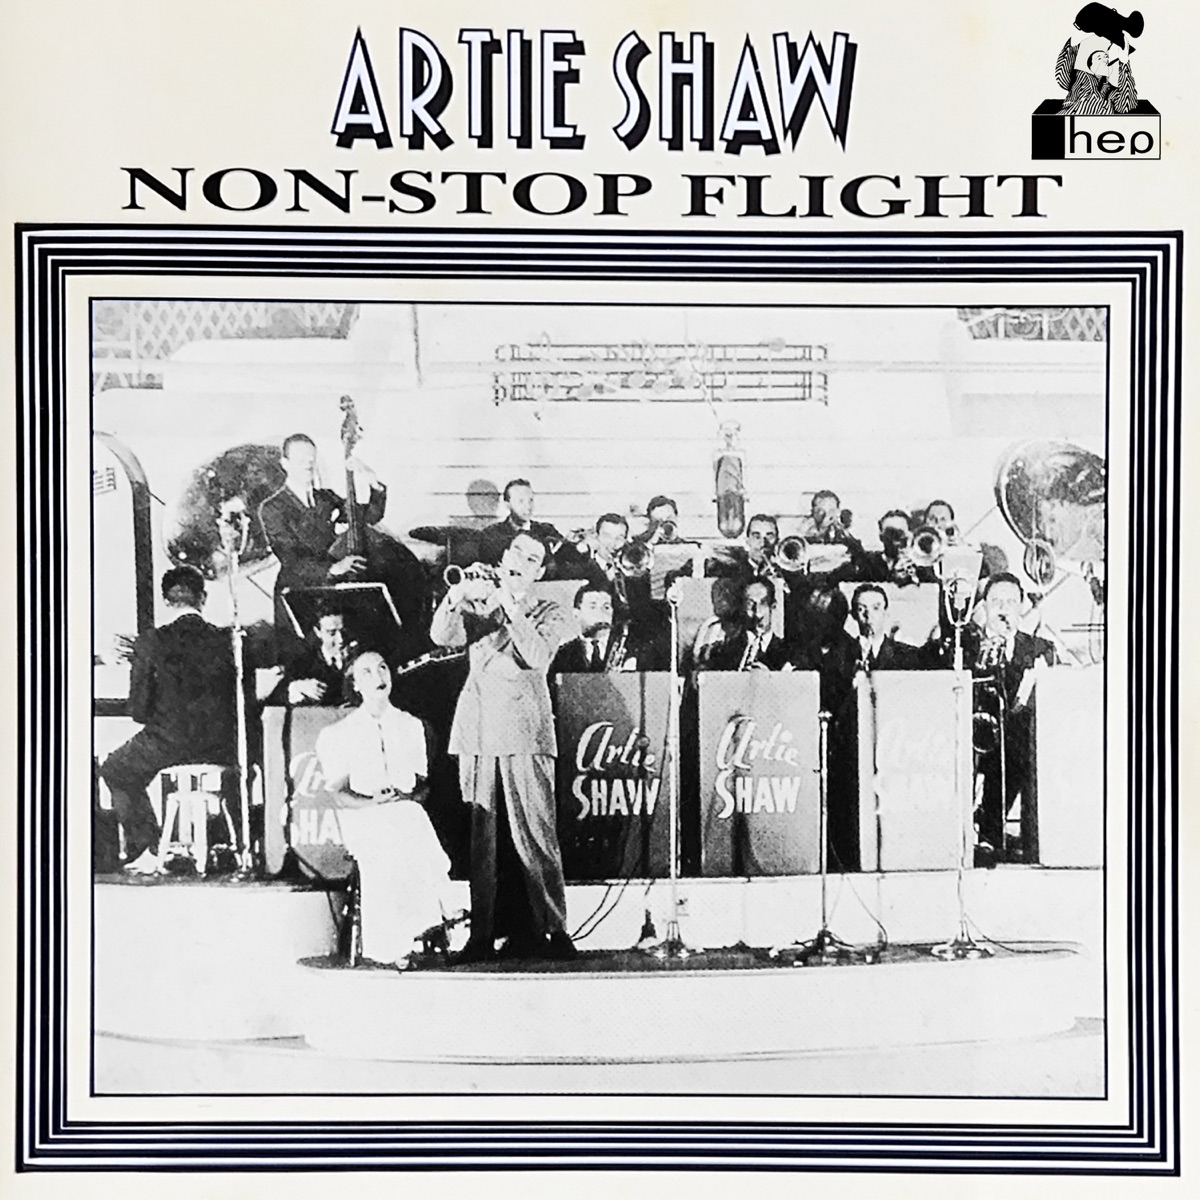 Non-Stop Flight - Album by Artie Shaw - Apple Music